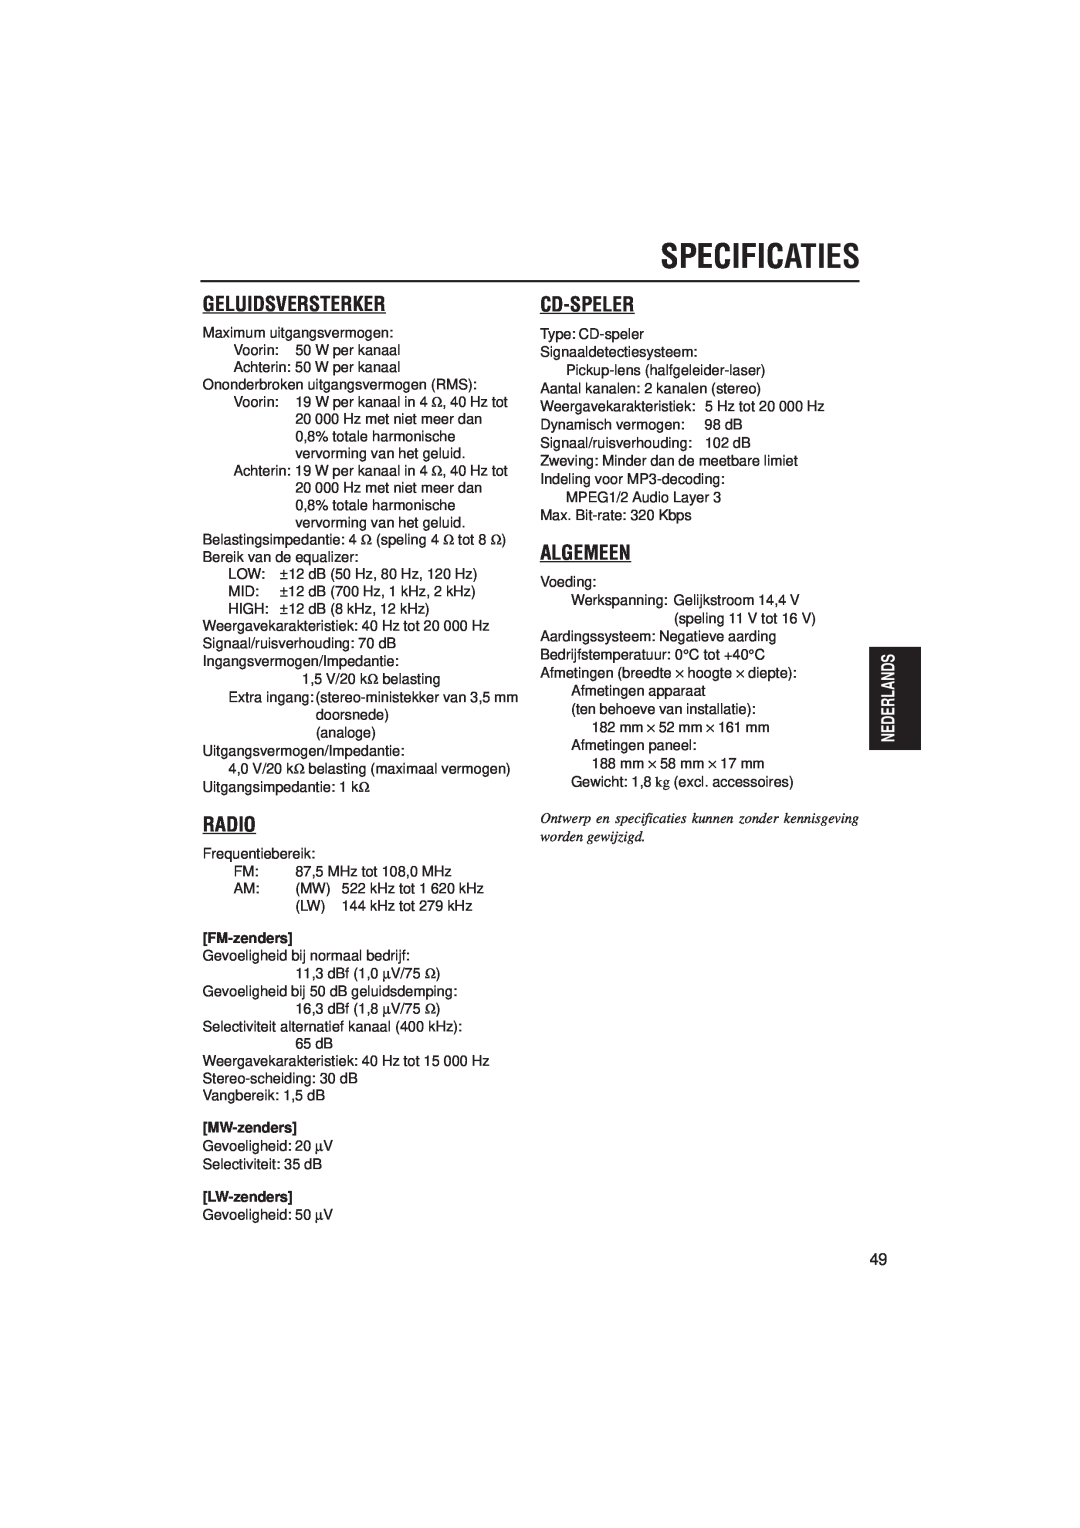 JVC KD-SH99R manual Specificaties, Geluidsversterker, Radio, Cd-Speler, Algemeen, FM-zenders, MW-zenders, LW-zenders 